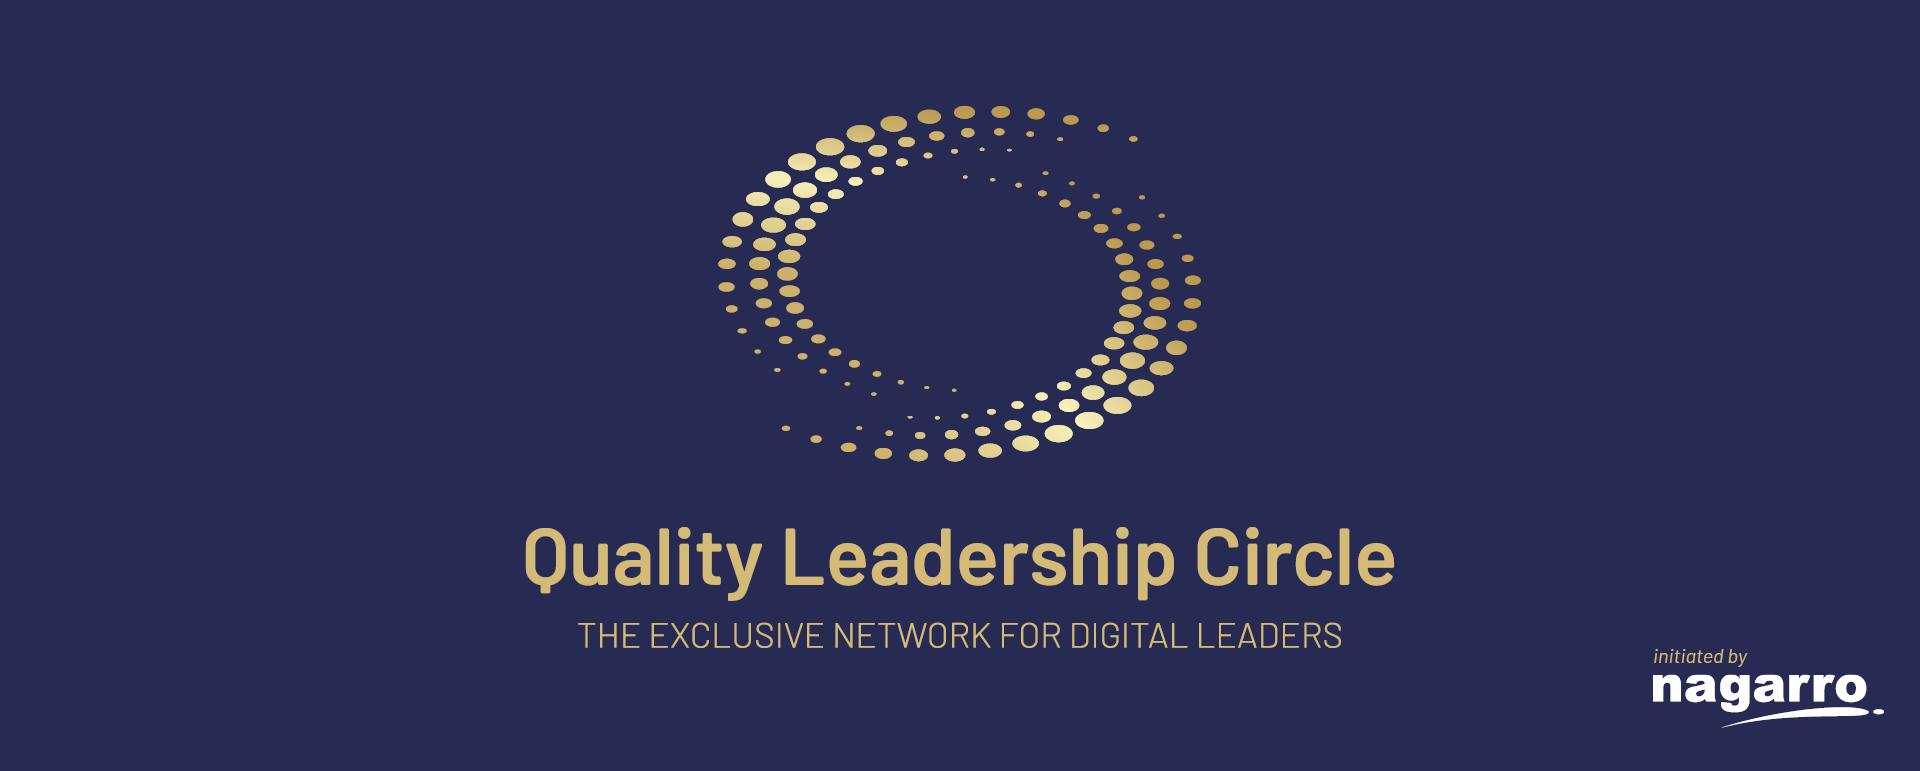 Quality Leadership Circle initiated by Nagarro